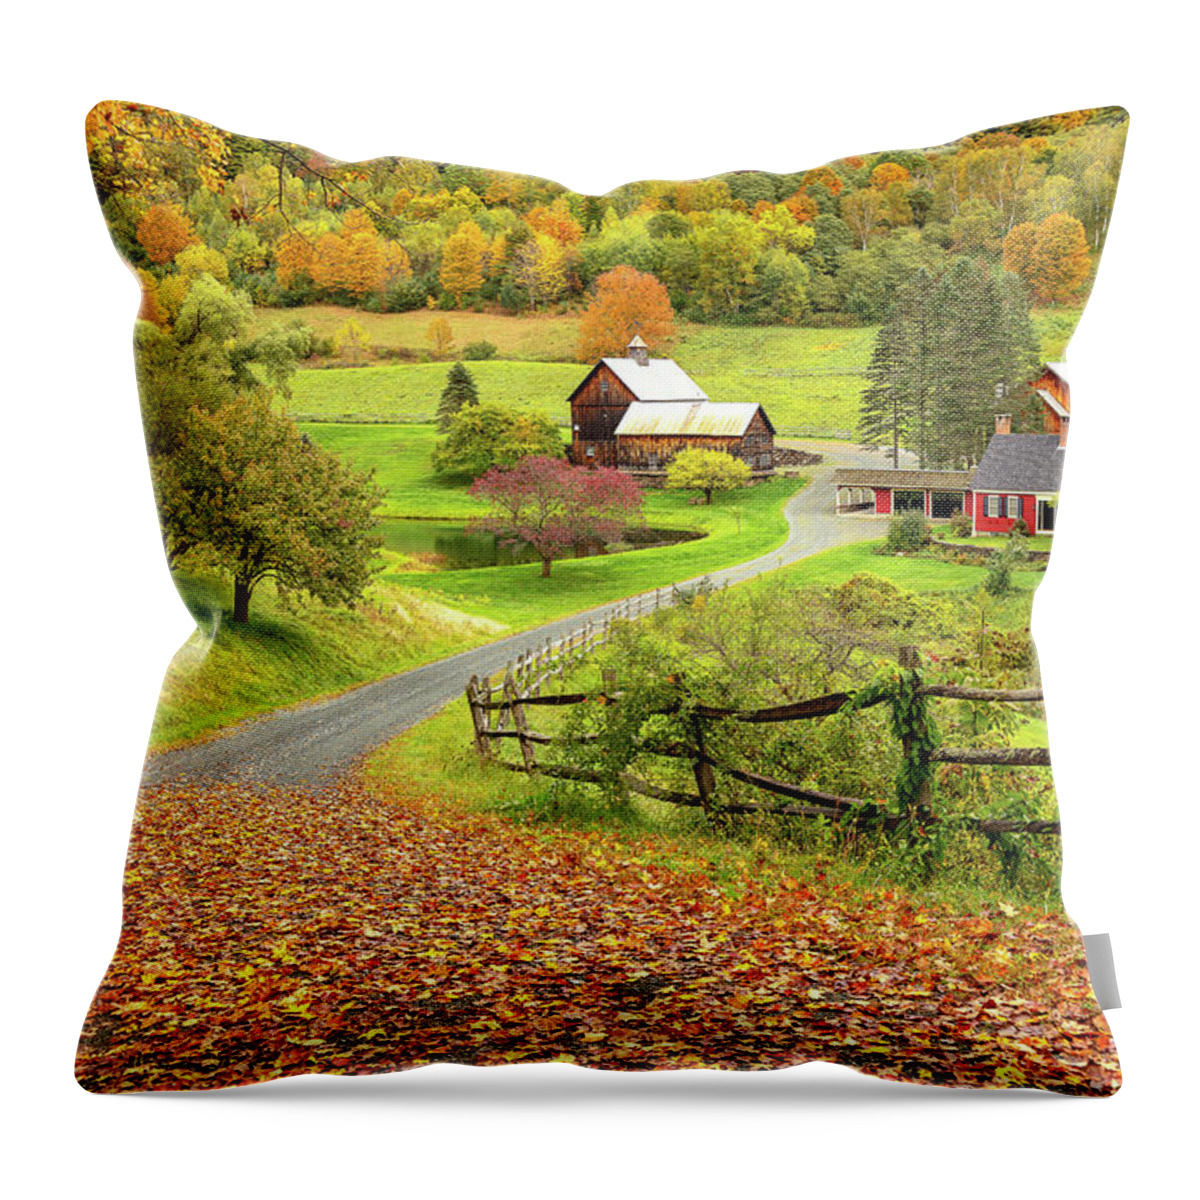 Farm Throw Pillow featuring the photograph Sleepy Hollow Farm in Autumn by Rod Best